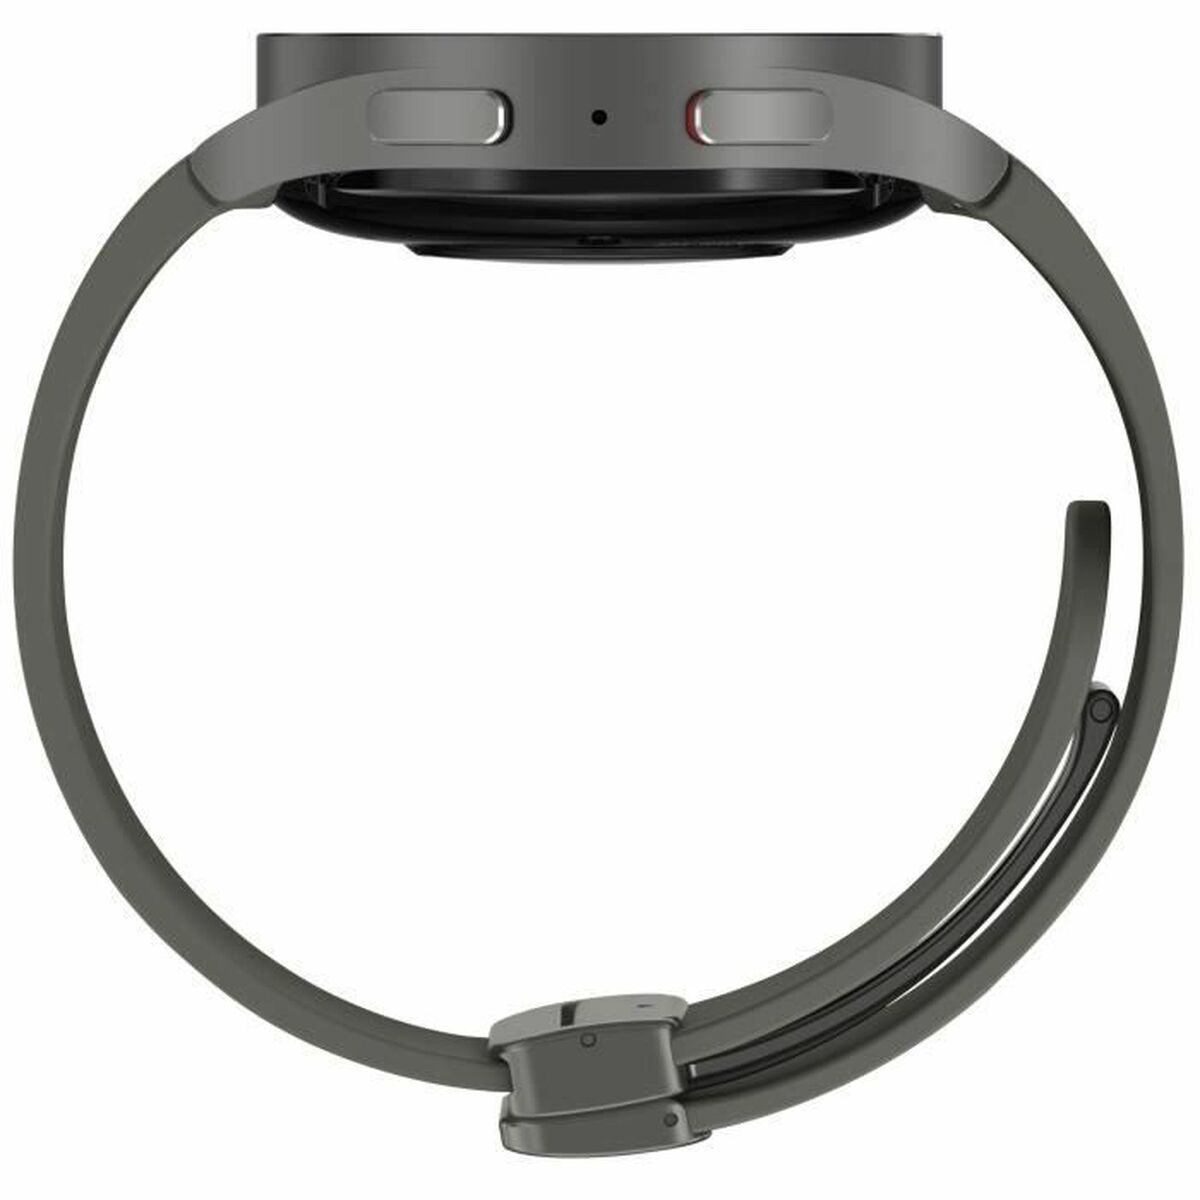 SAMSUNG Watch5 Pro Smartwatch silicone, Silver/Black